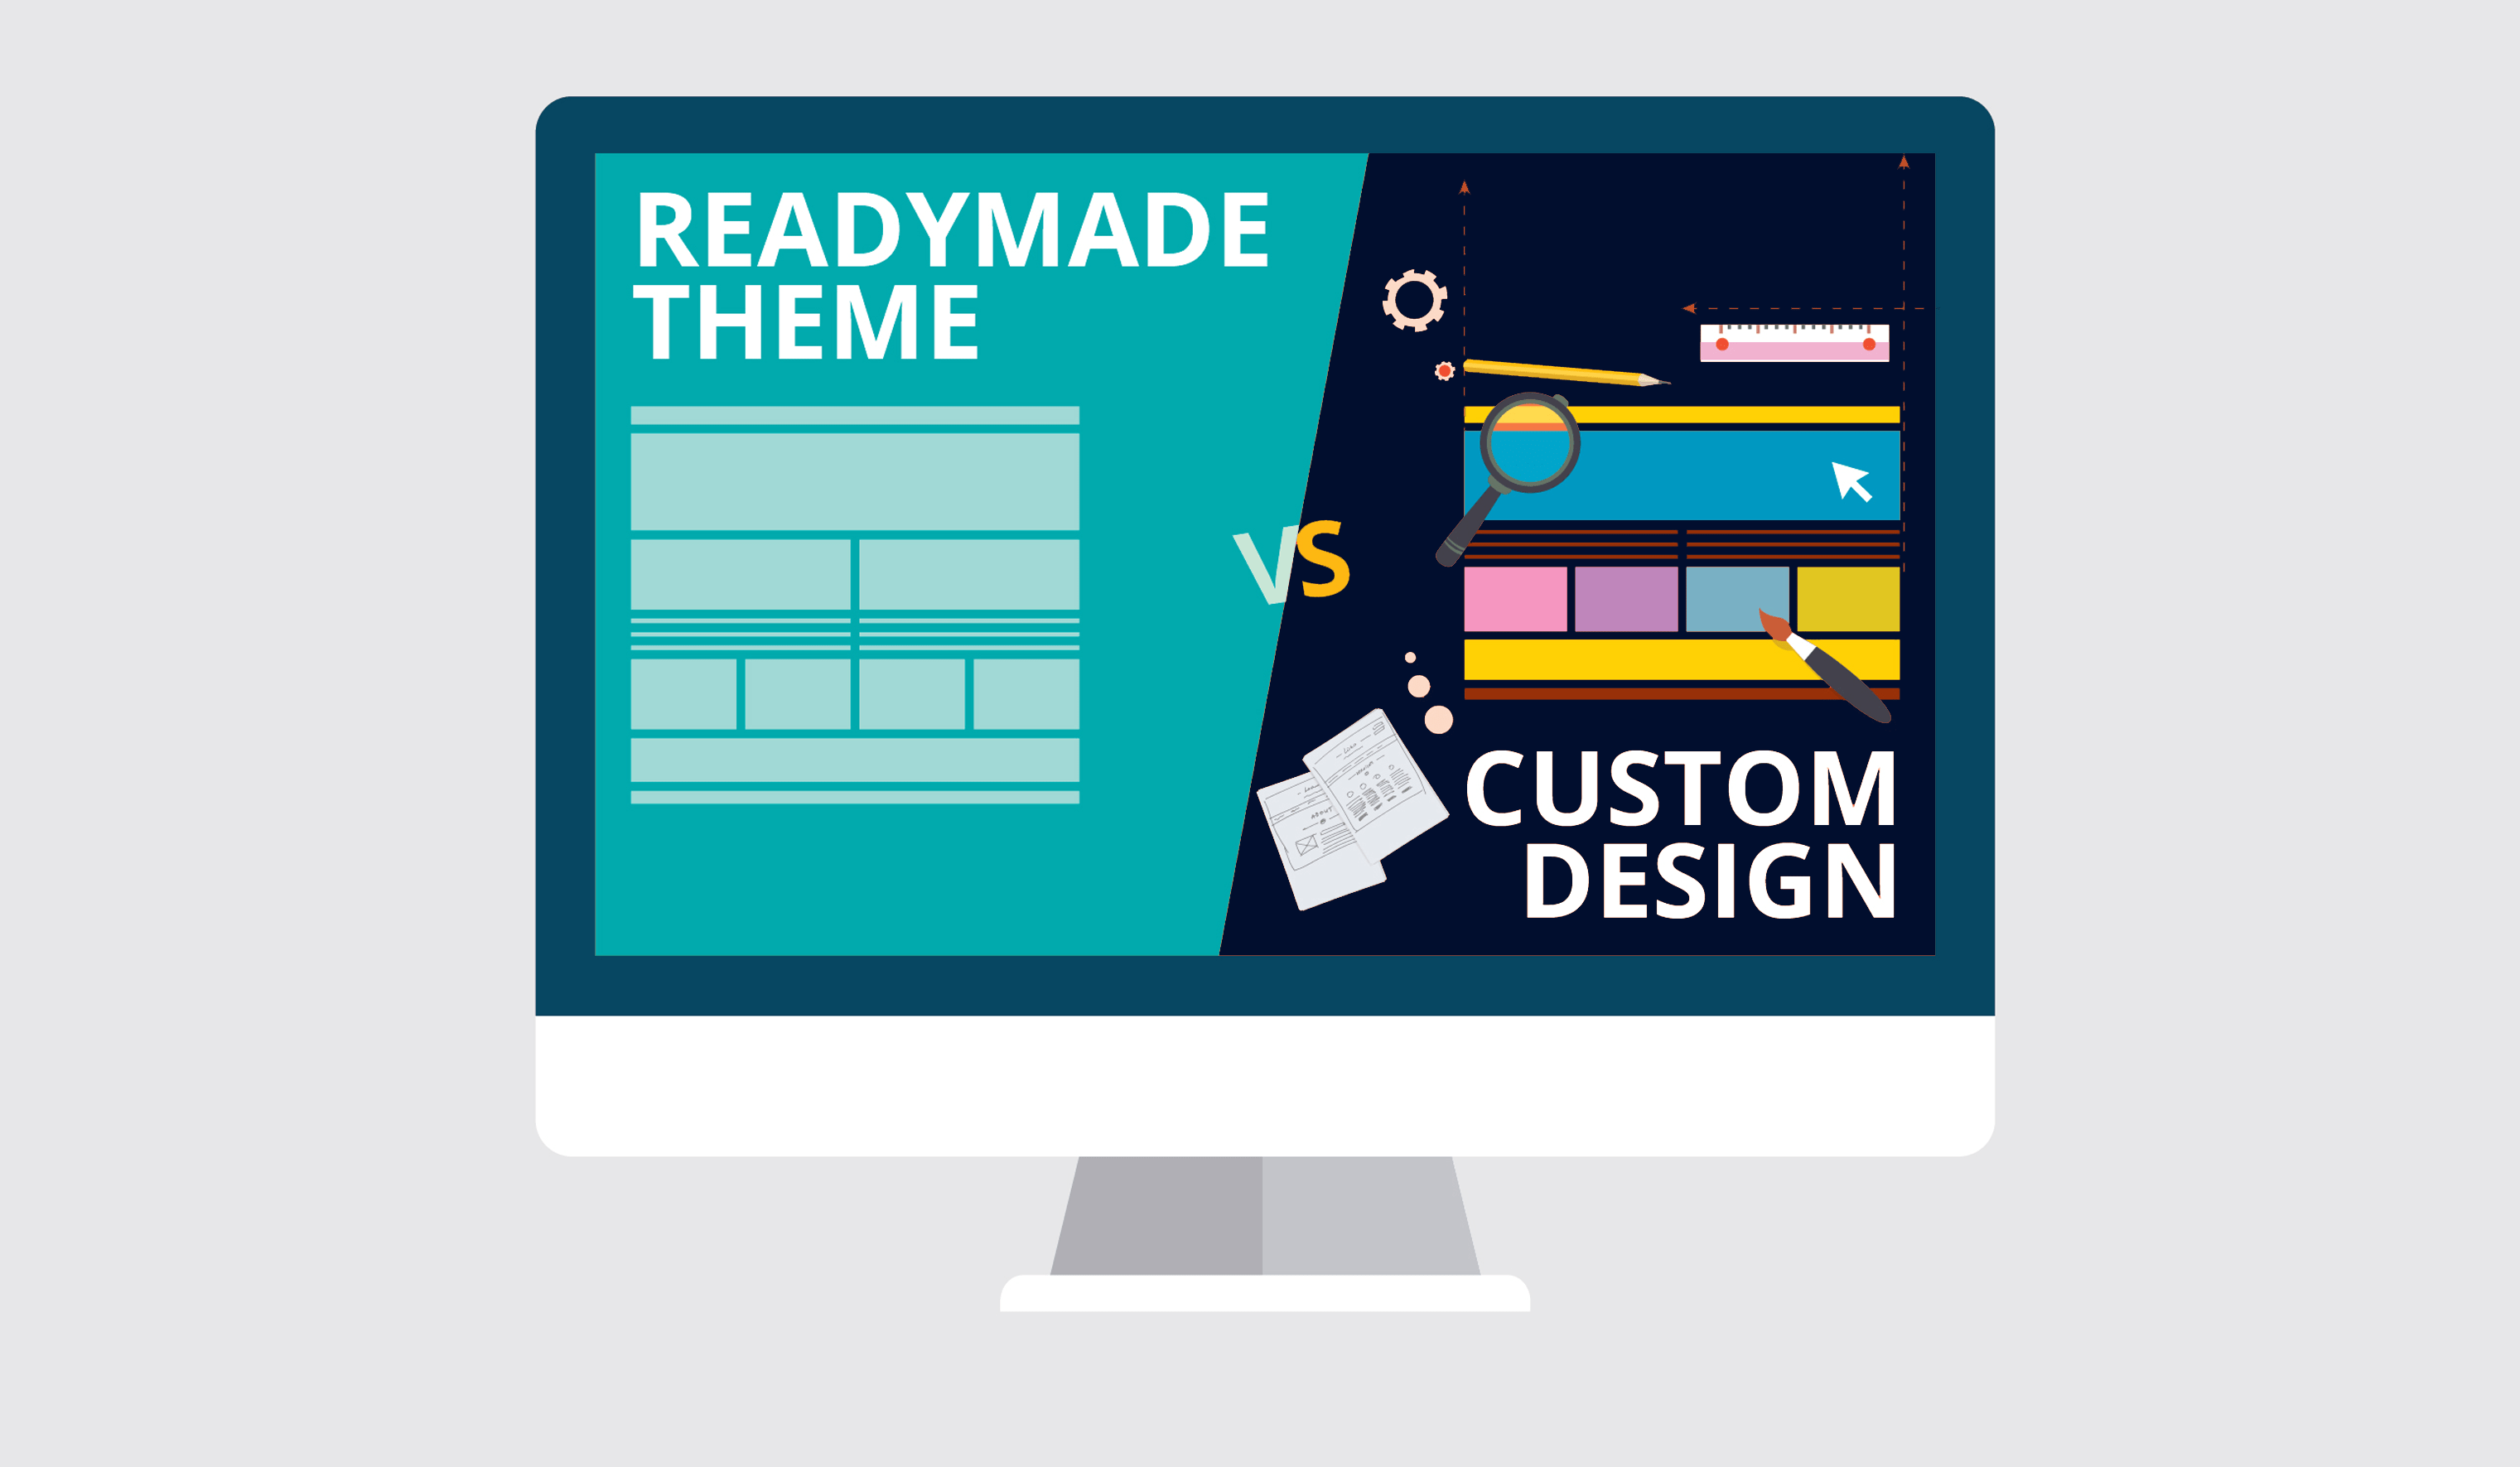 Custom Web Design vs Readymade Website Templates